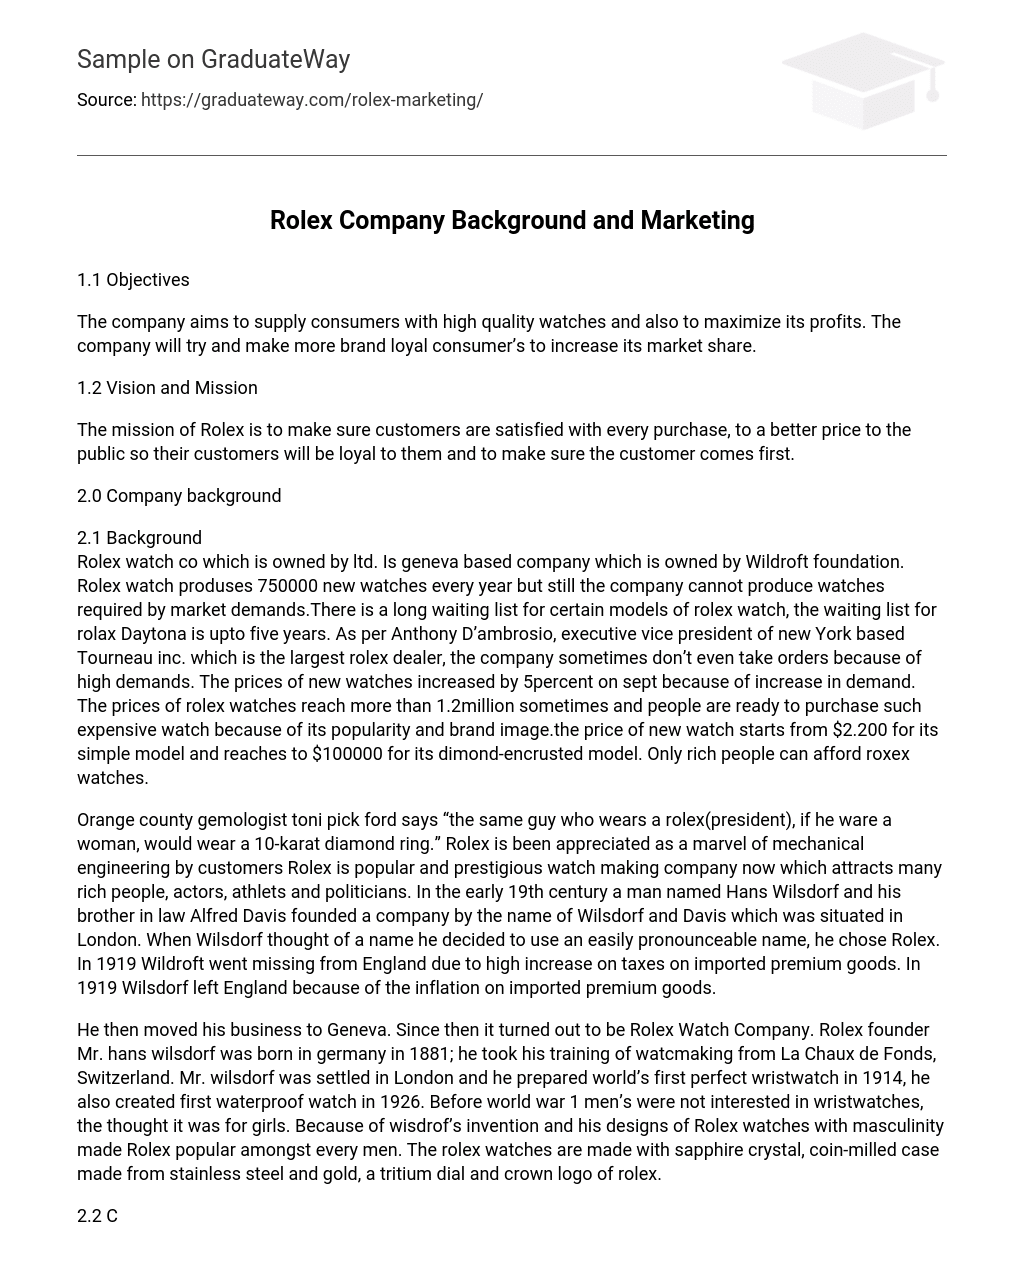 Rolex Company Background and Marketing Analysis